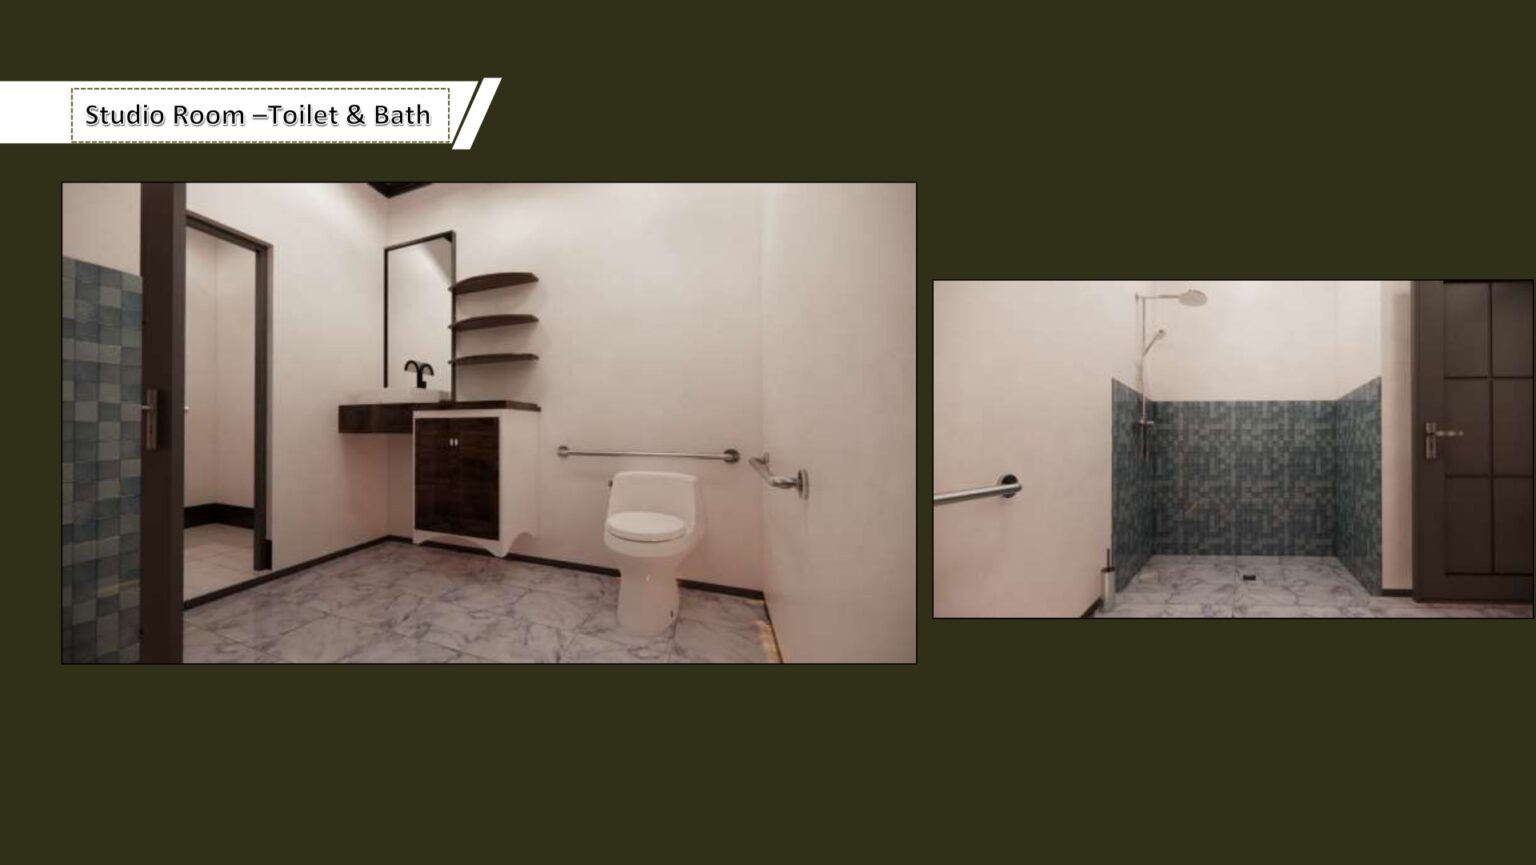 Retreat at Carrollton - studio room - toilet and bath